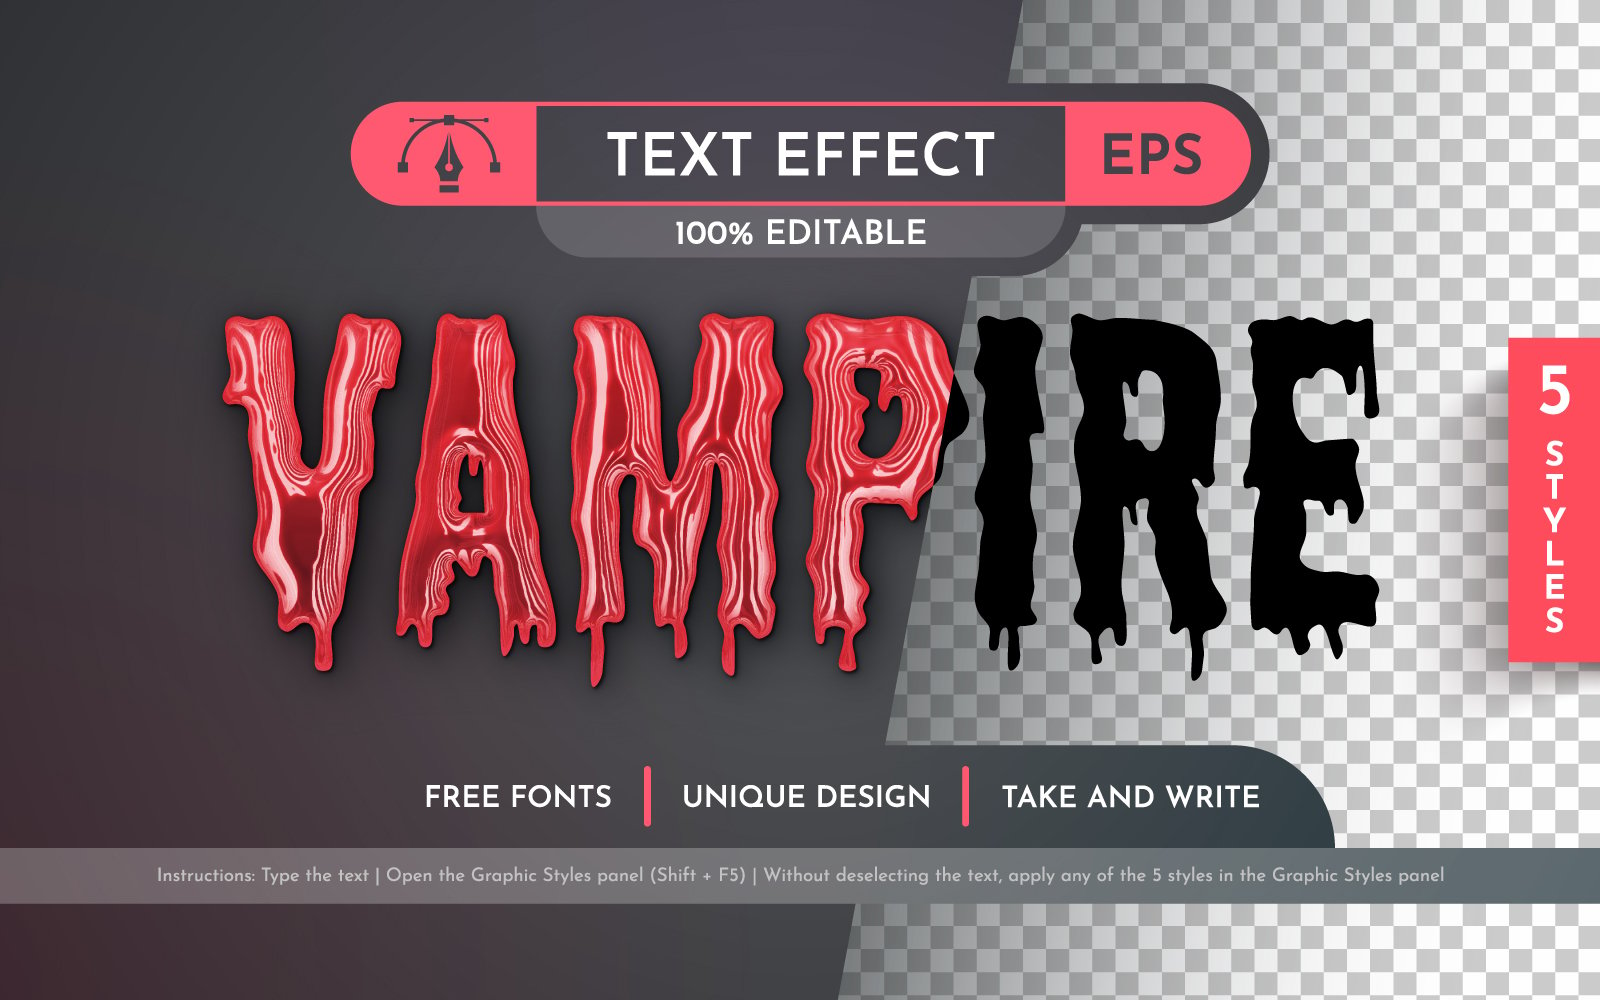 Template #403231 Text Effect Webdesign Template - Logo template Preview